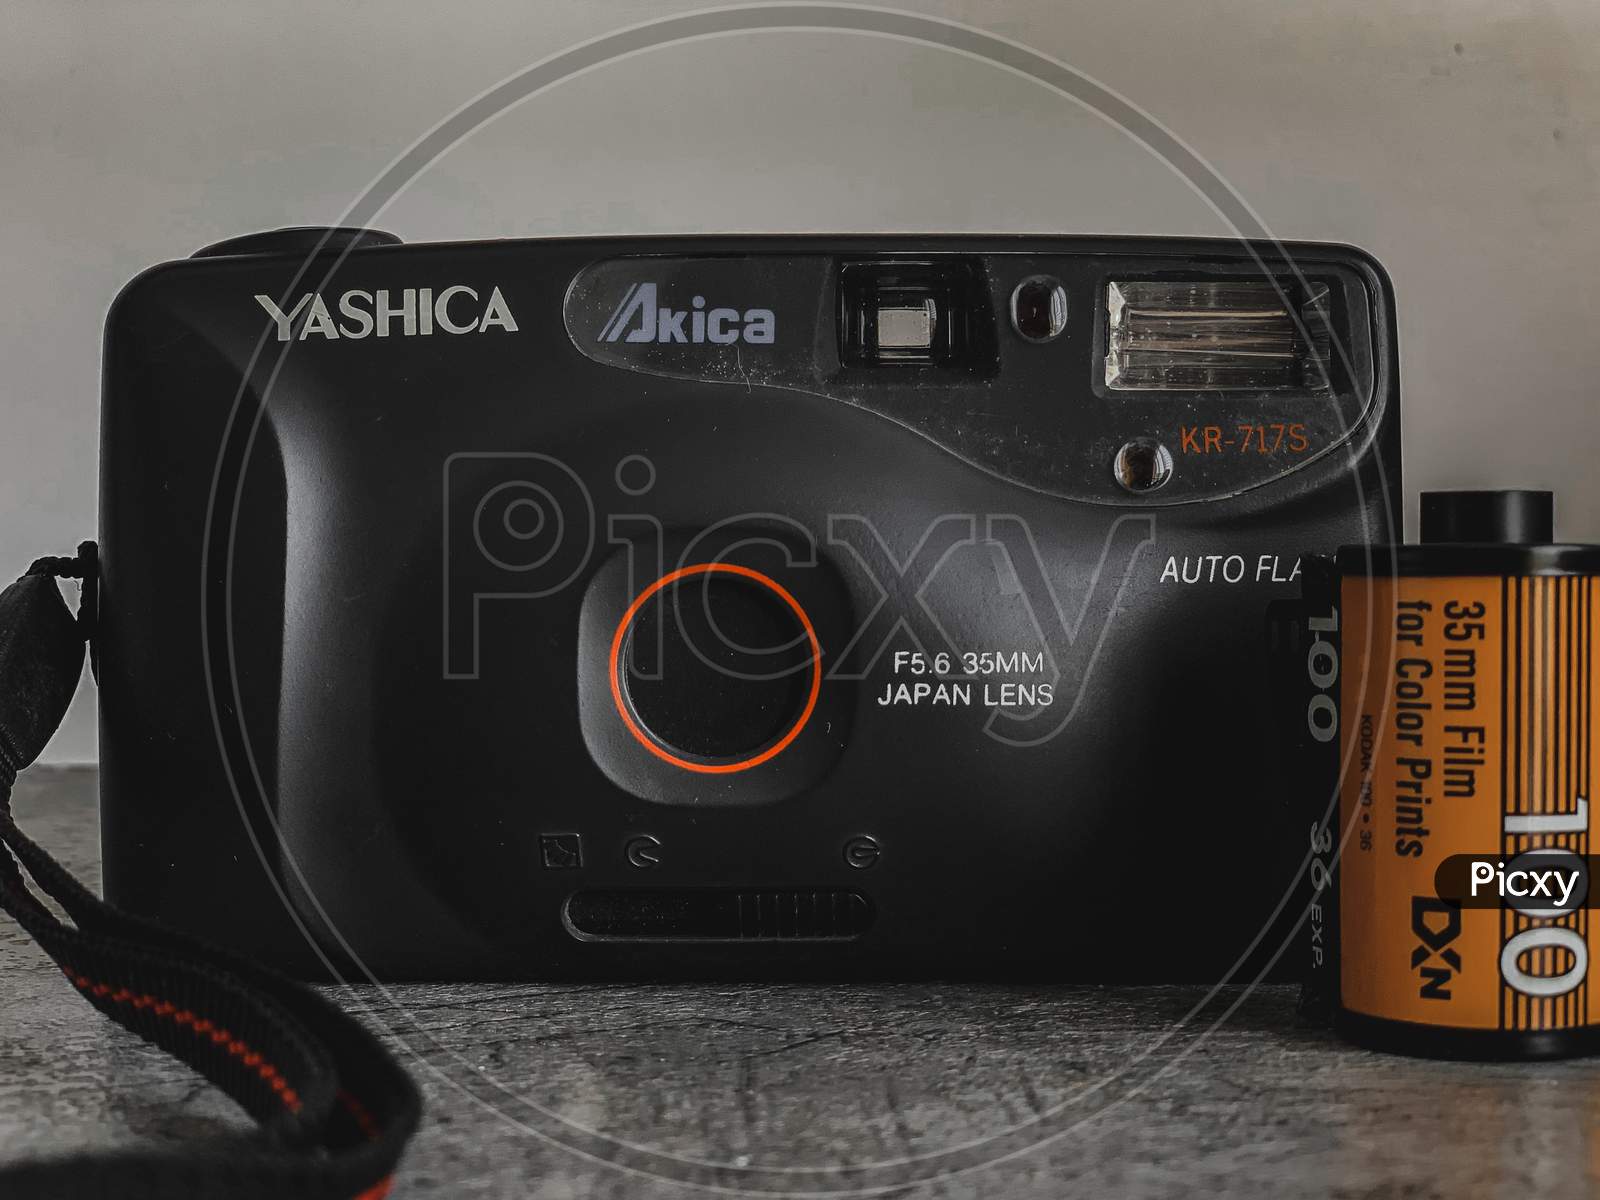 Yashica vintage reel camera.